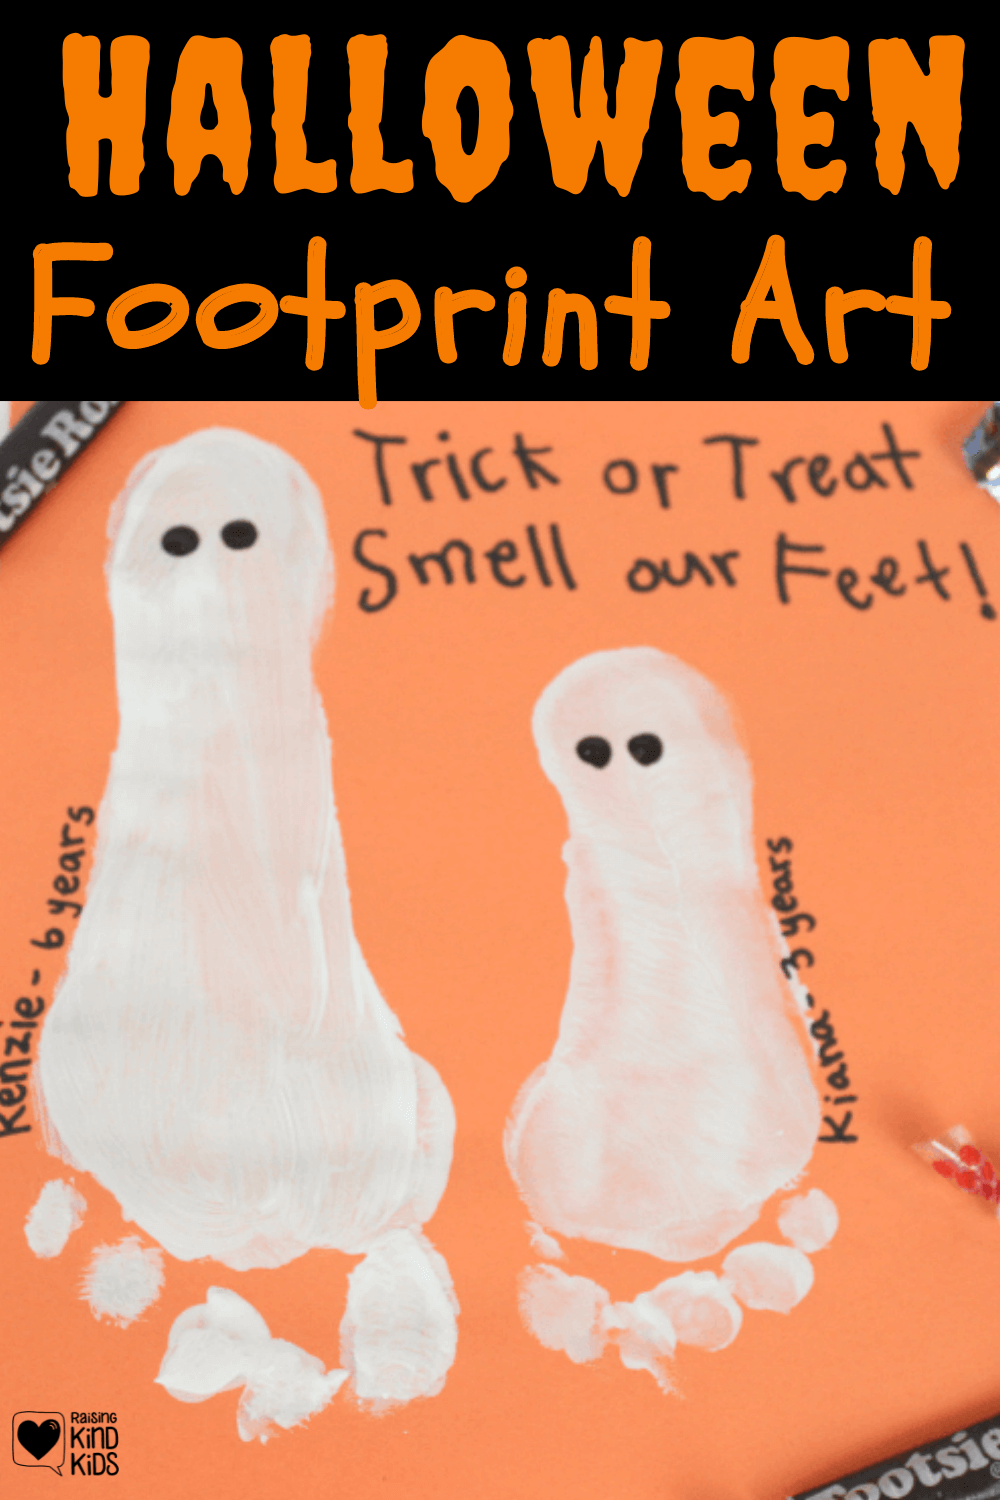 Halloween Footprint Ghosts are a great Halloween craft #Halloweencraft #Halloweenart #footprintart #Halloween